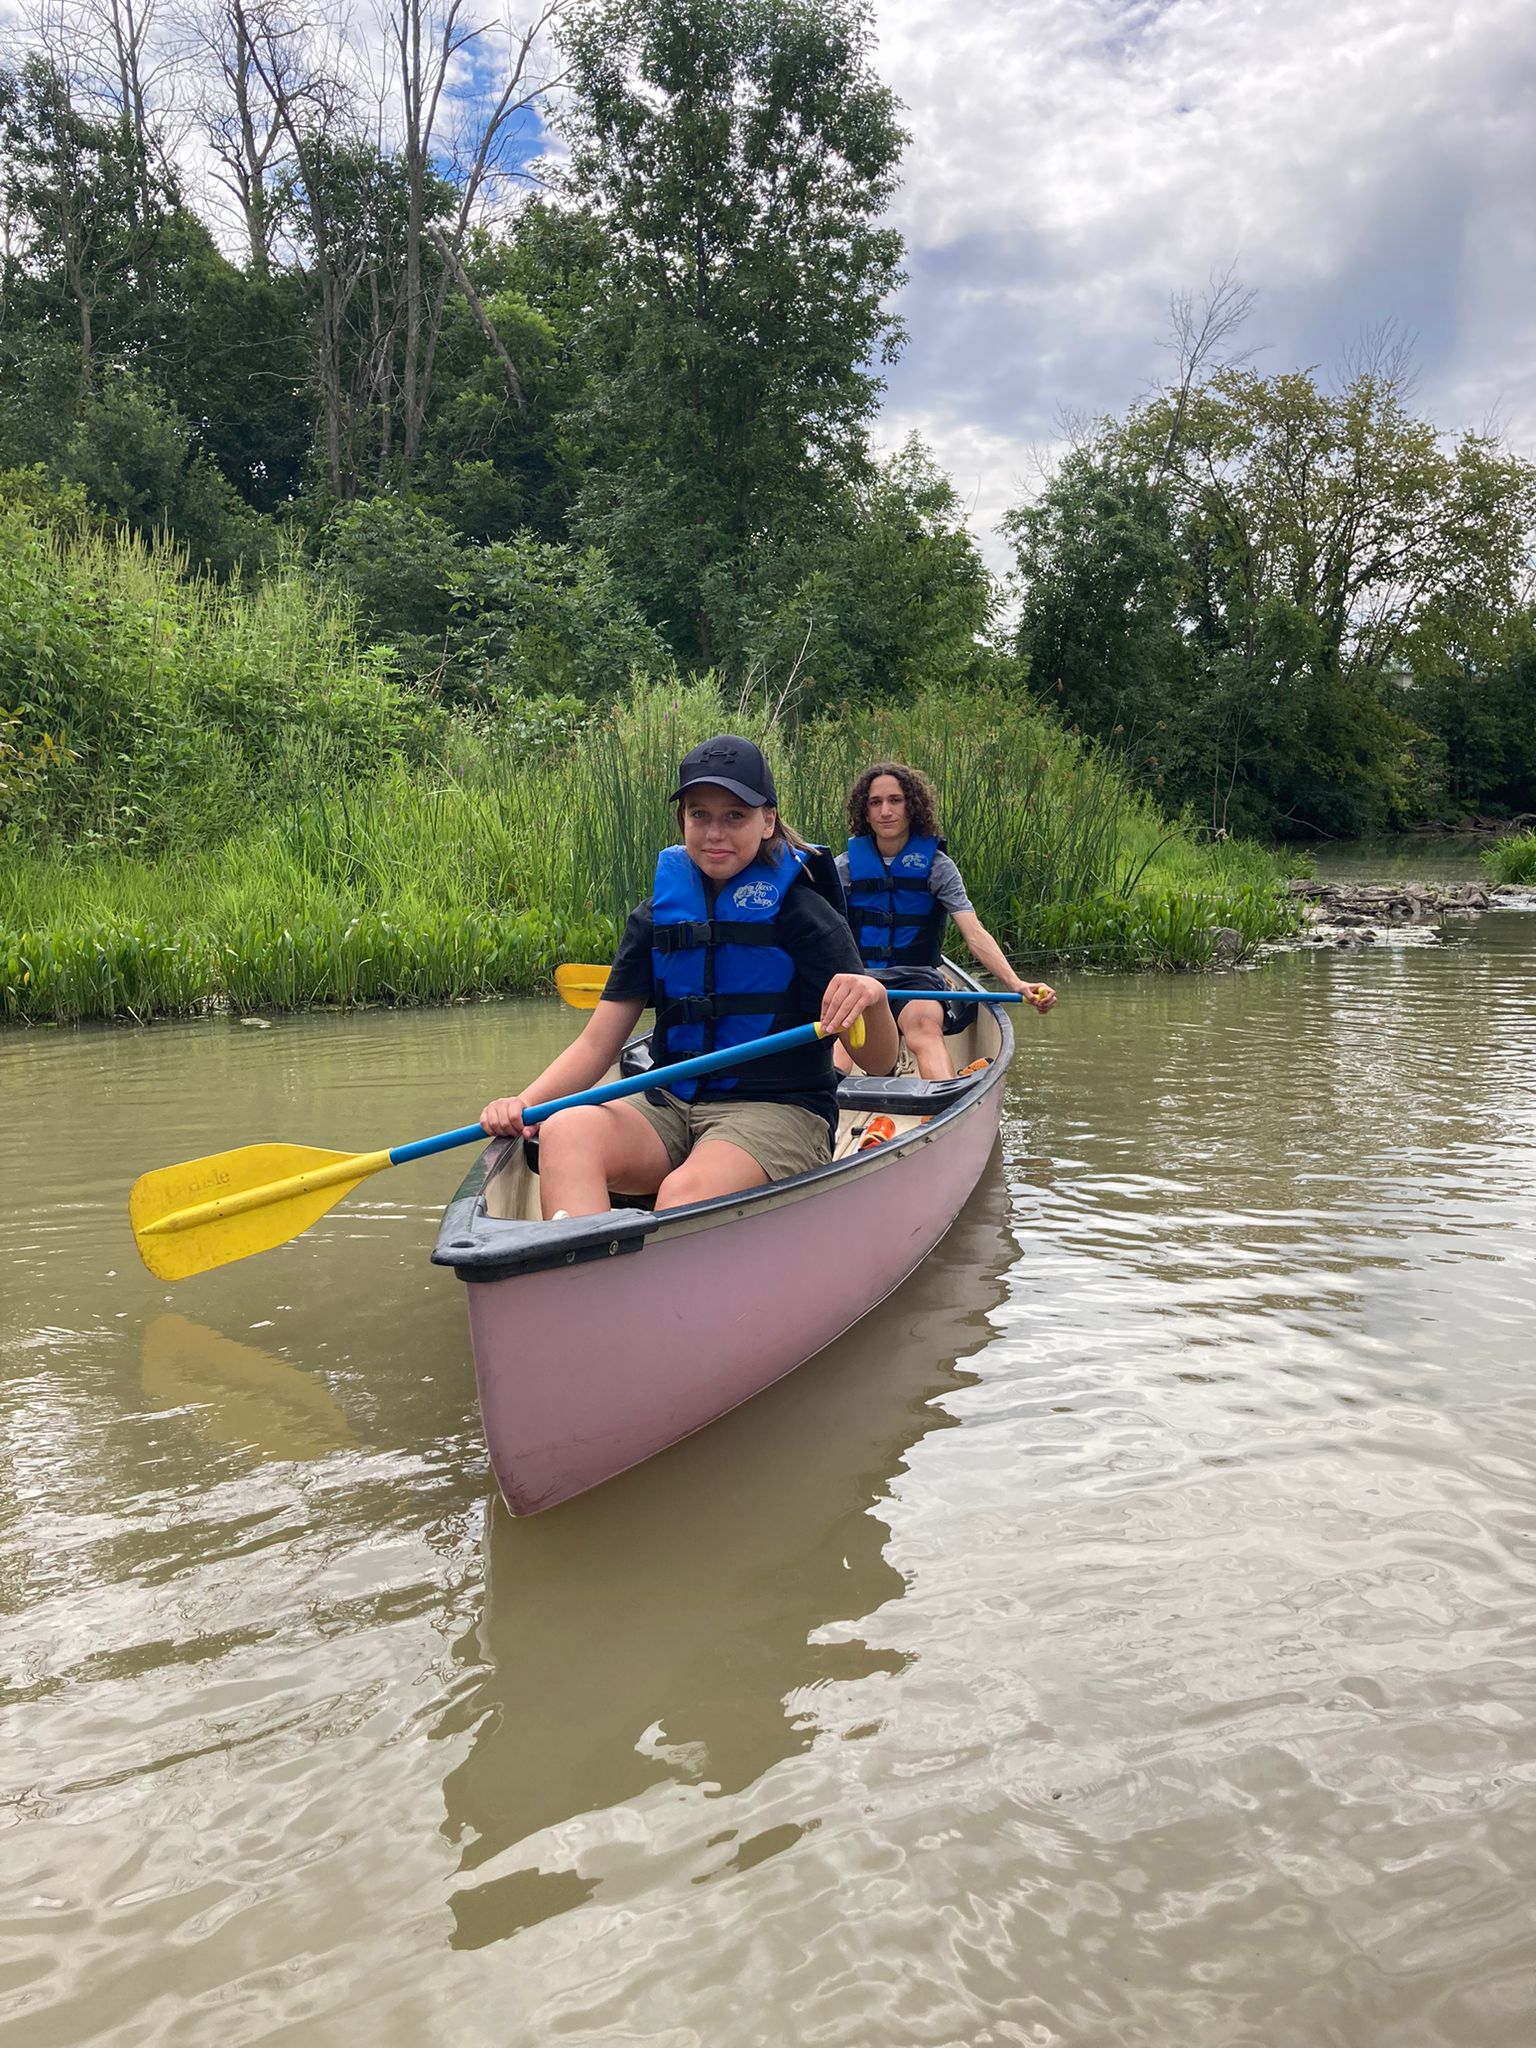 Paddling in a canoe